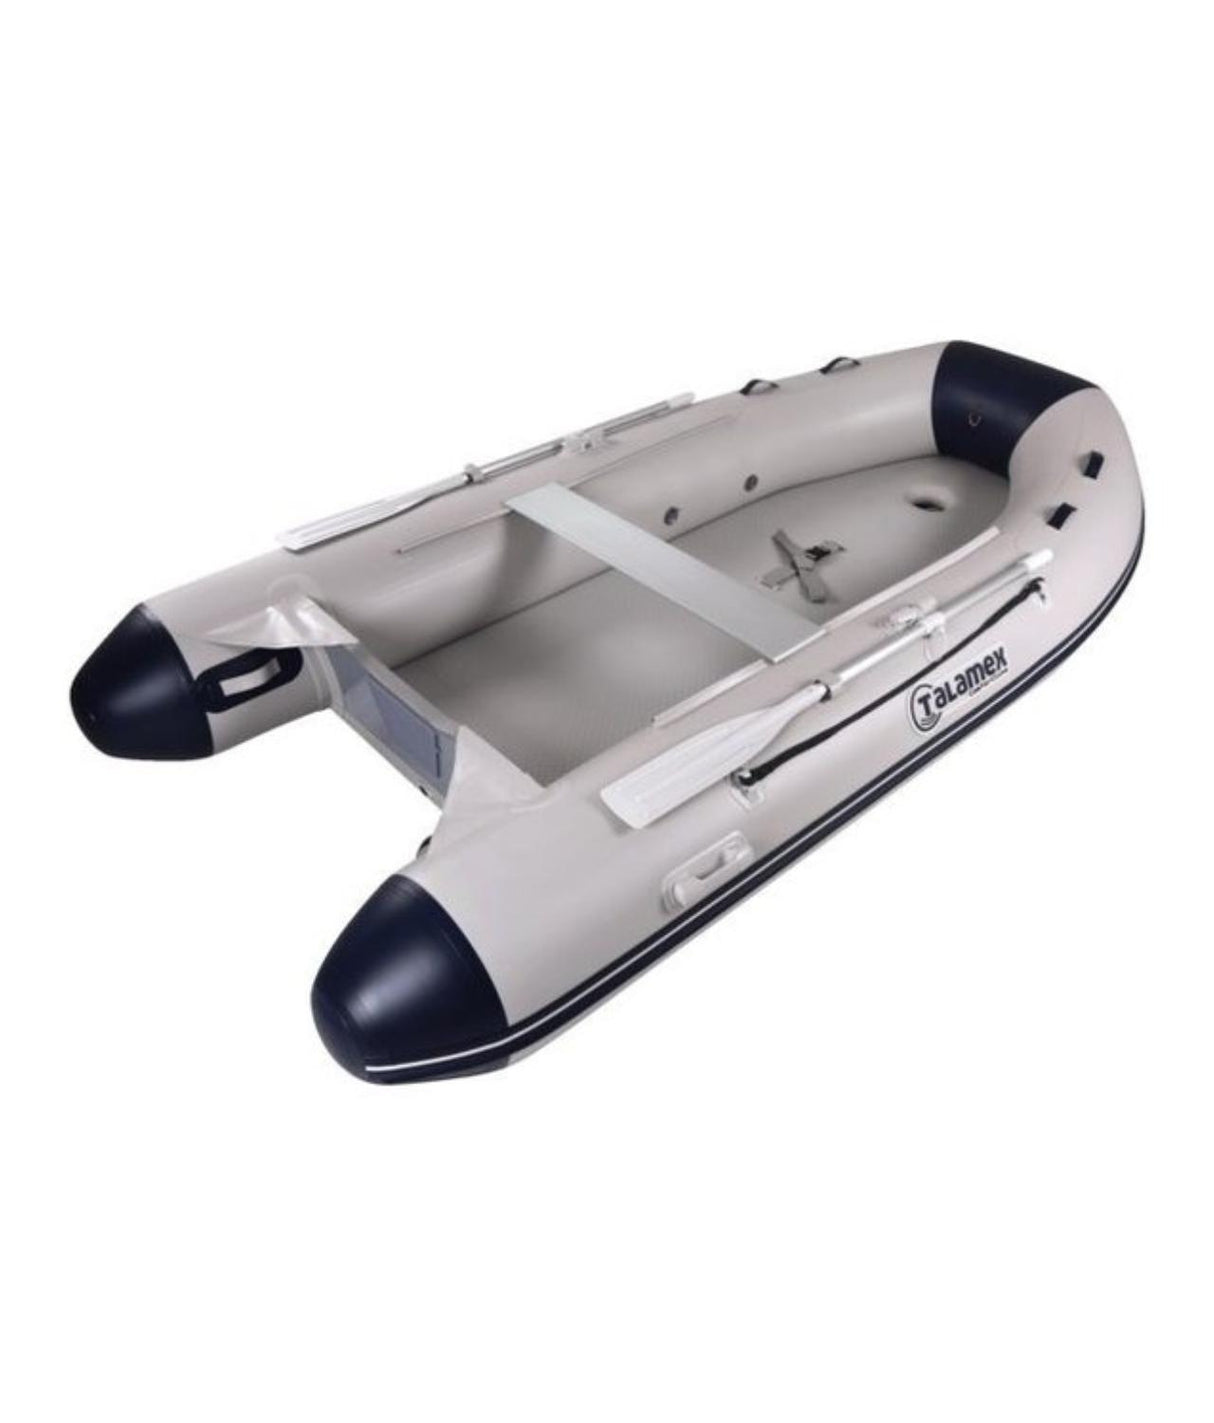 talamex comfortline tla 350 airdeck rubberboot